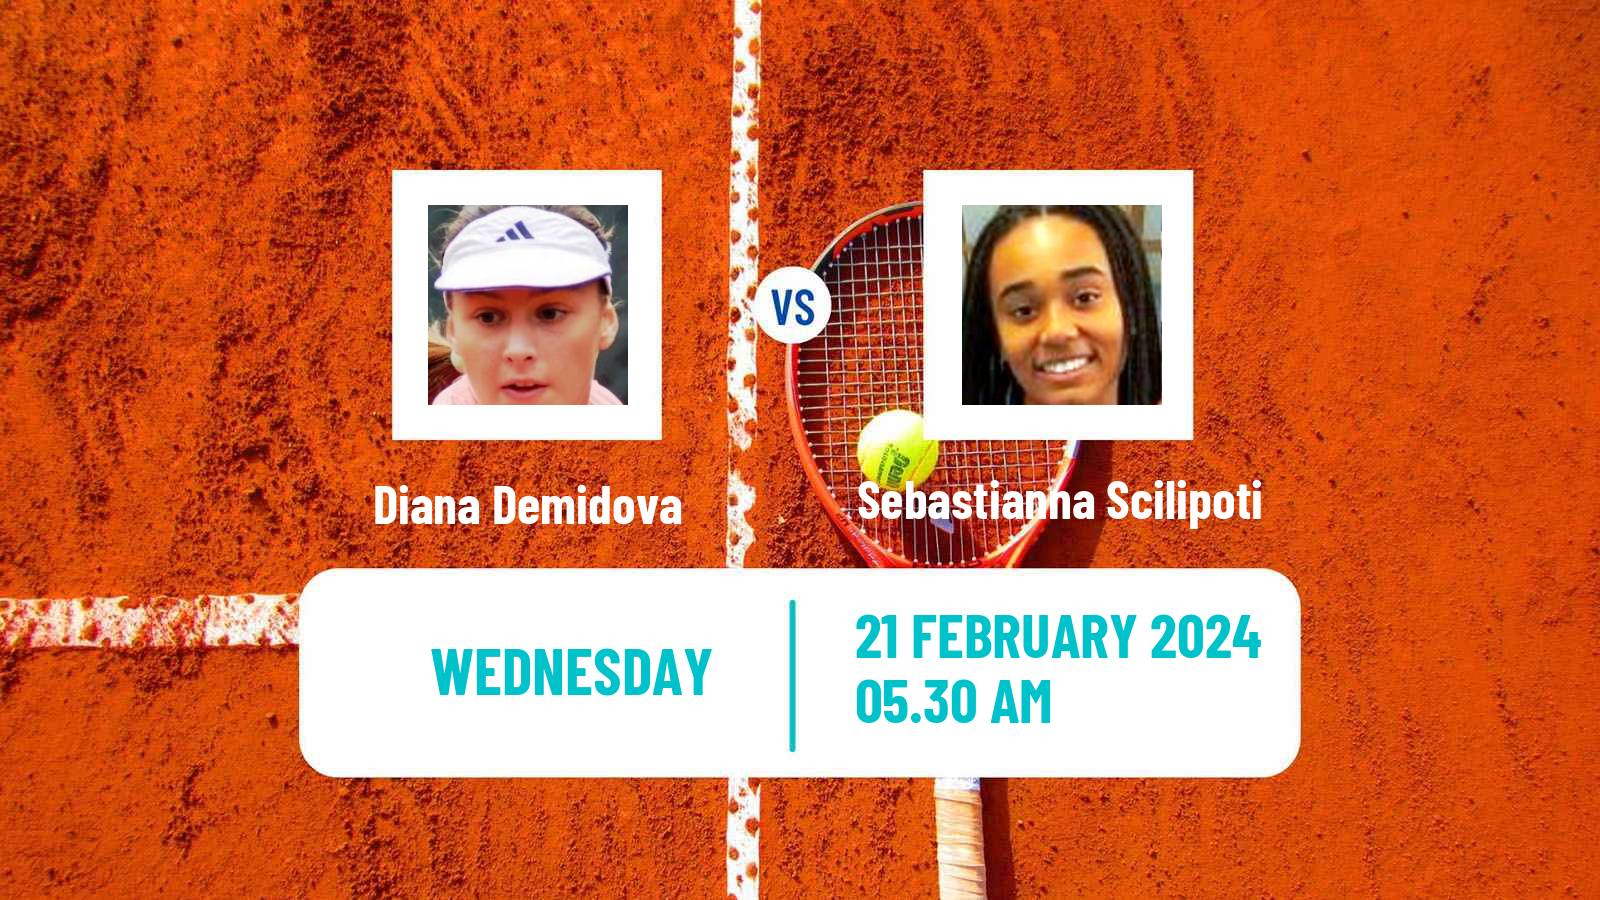 Tennis ITF W35 Antalya 4 Women Diana Demidova - Sebastianna Scilipoti